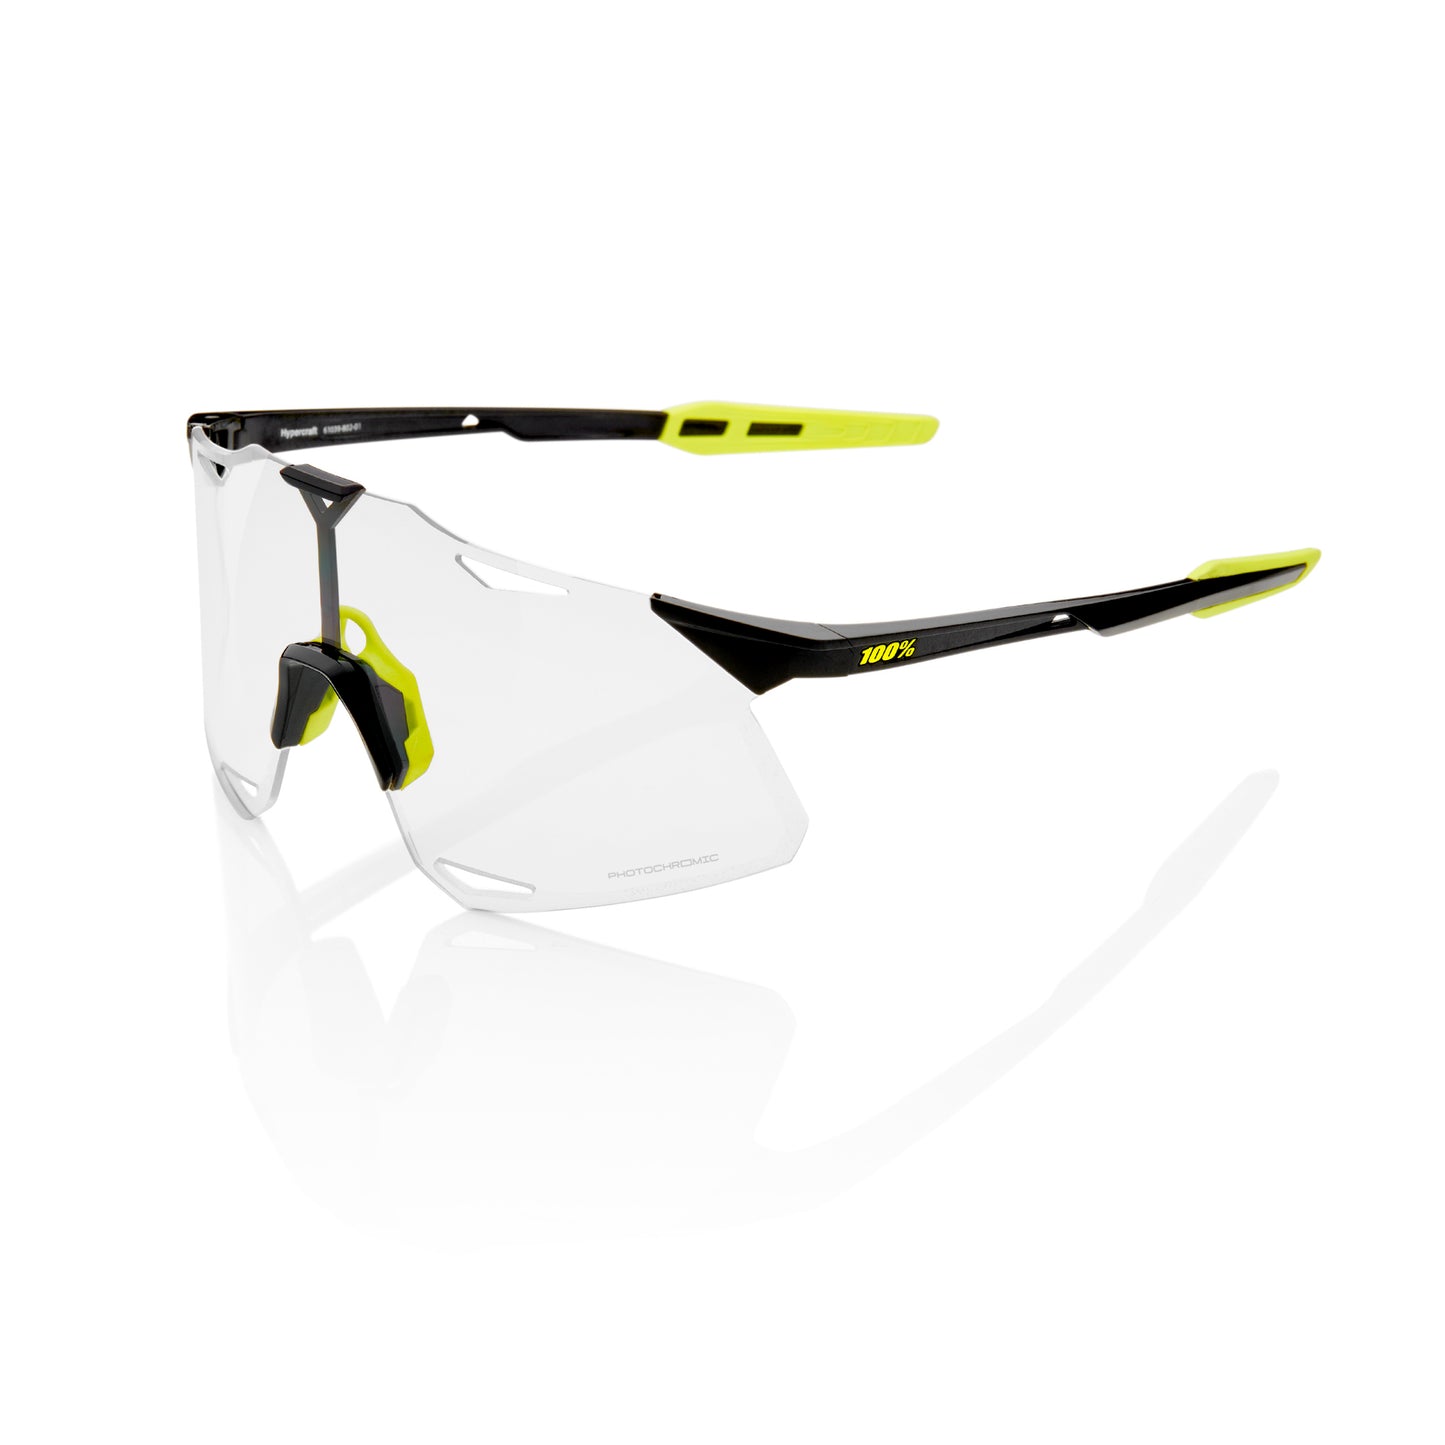 100 Percent Hypercraft Sunglasses - One Size Fits Most - Gloss Black - Photochromic Lens